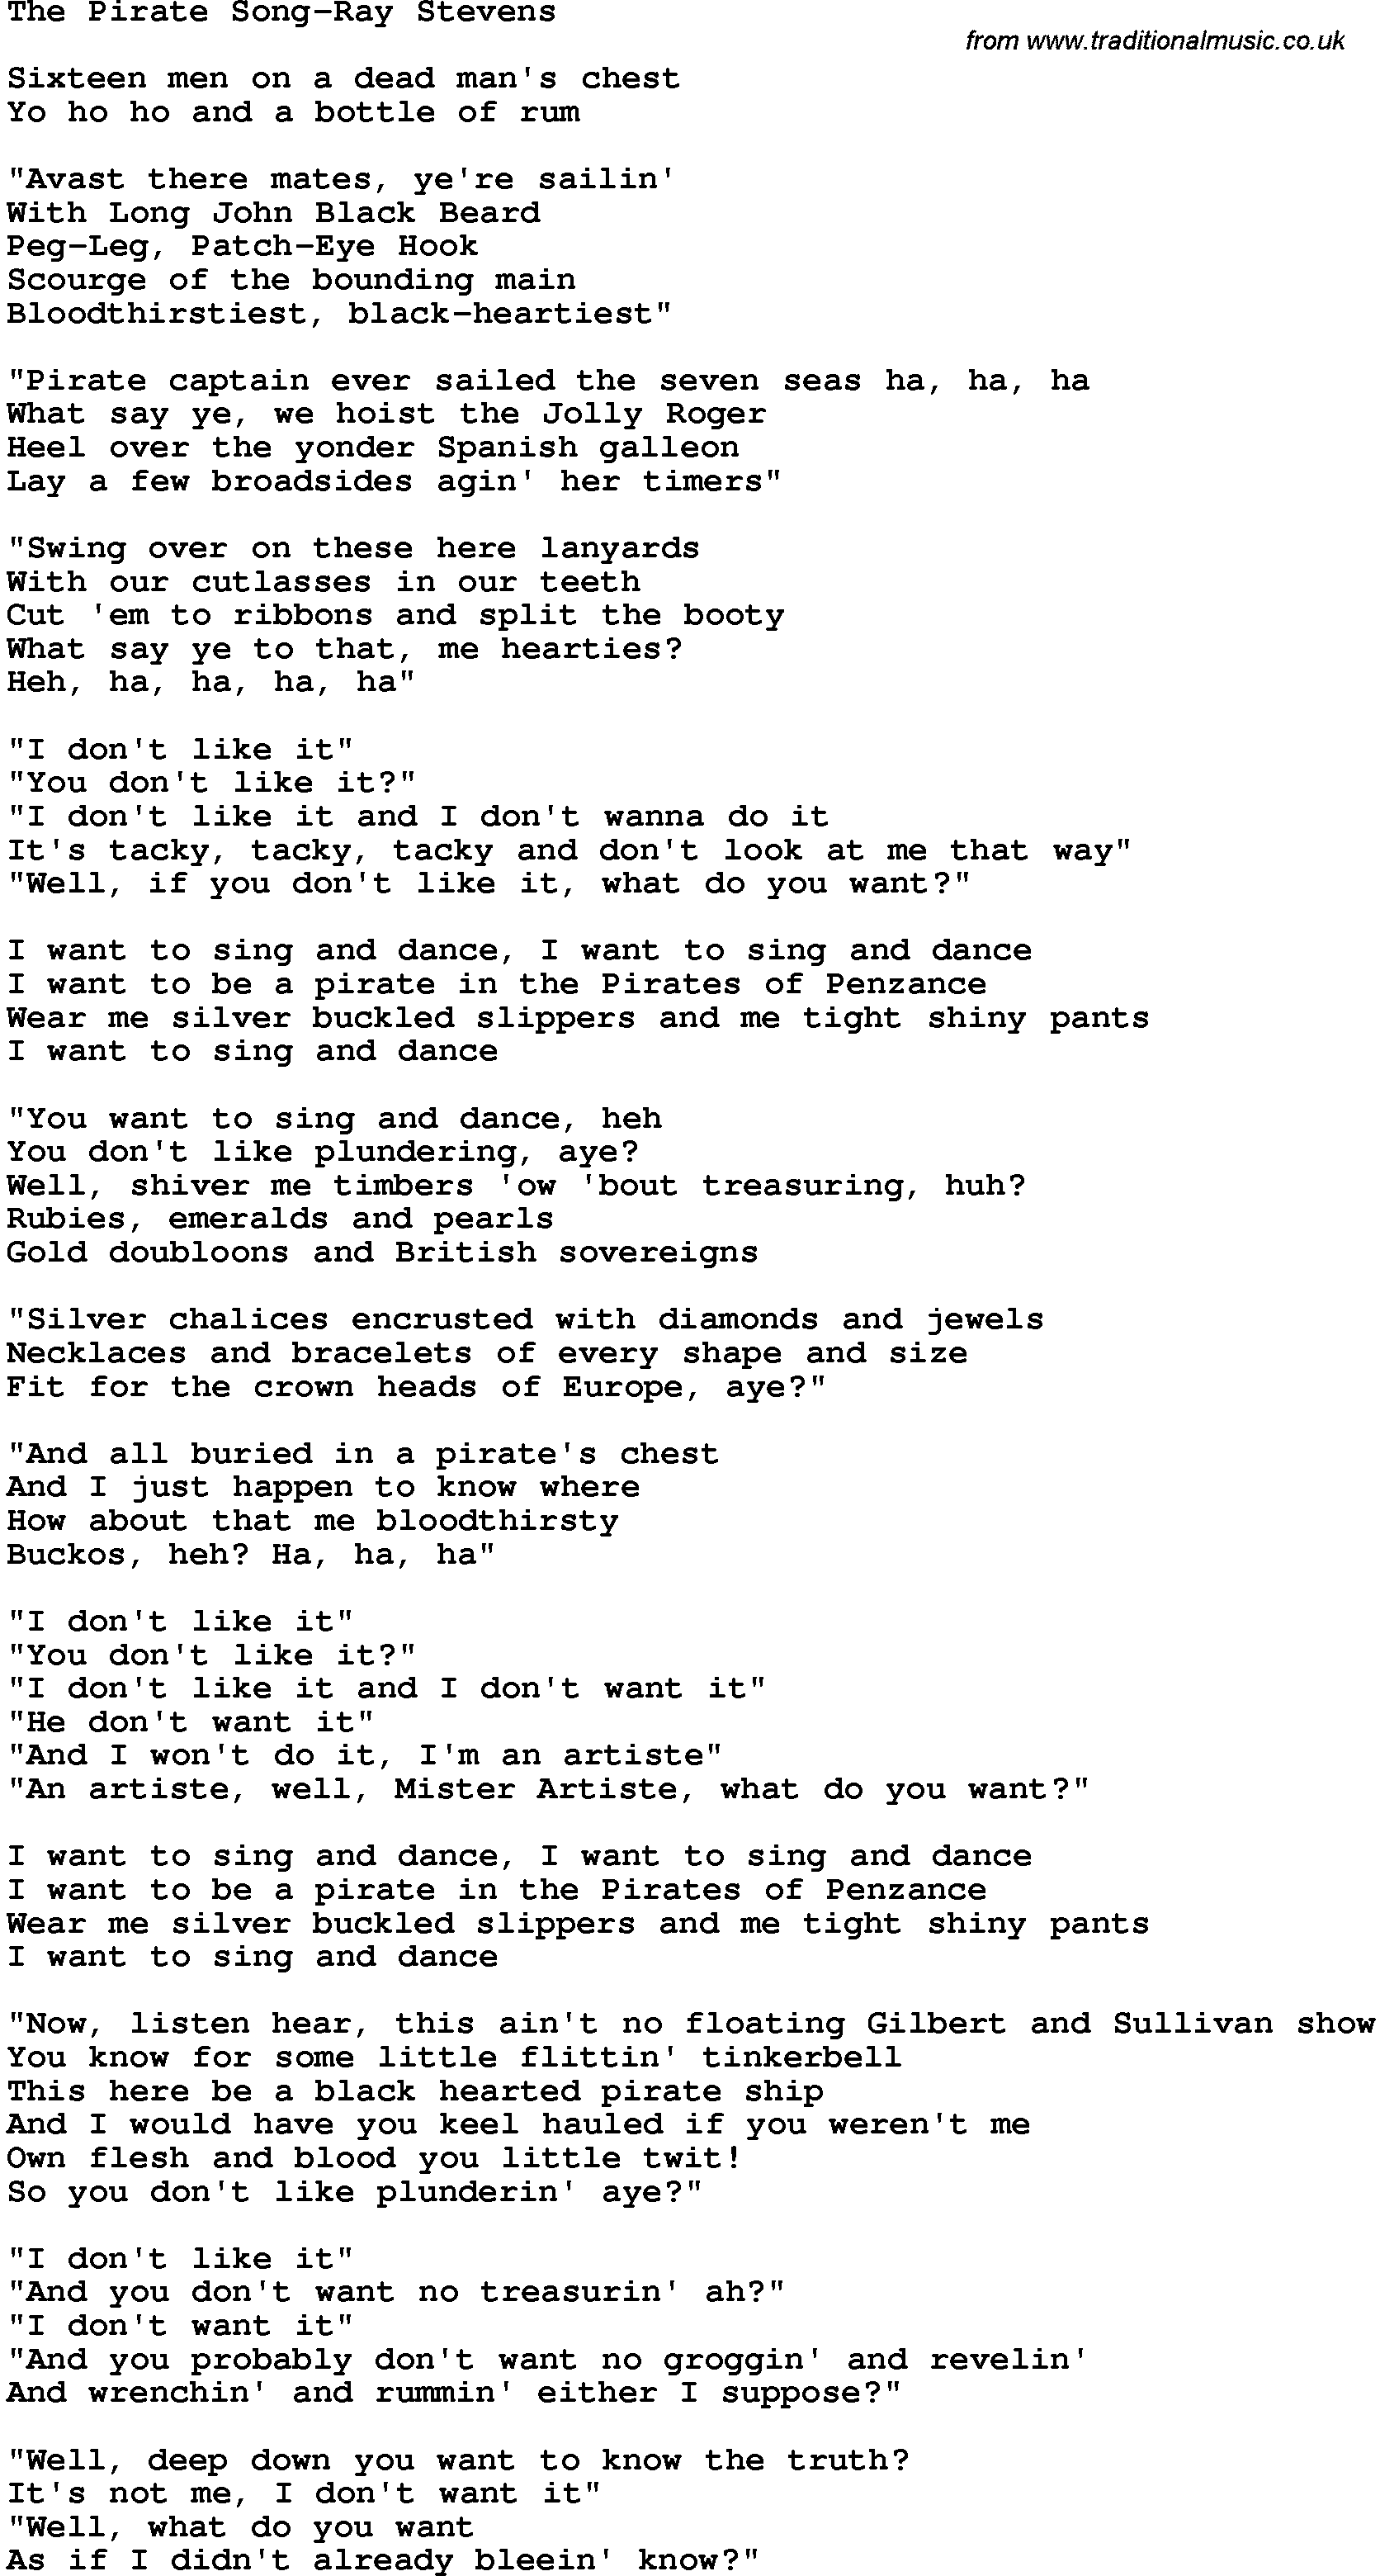 Novelty song: The Pirate Song-Ray Stevens lyrics